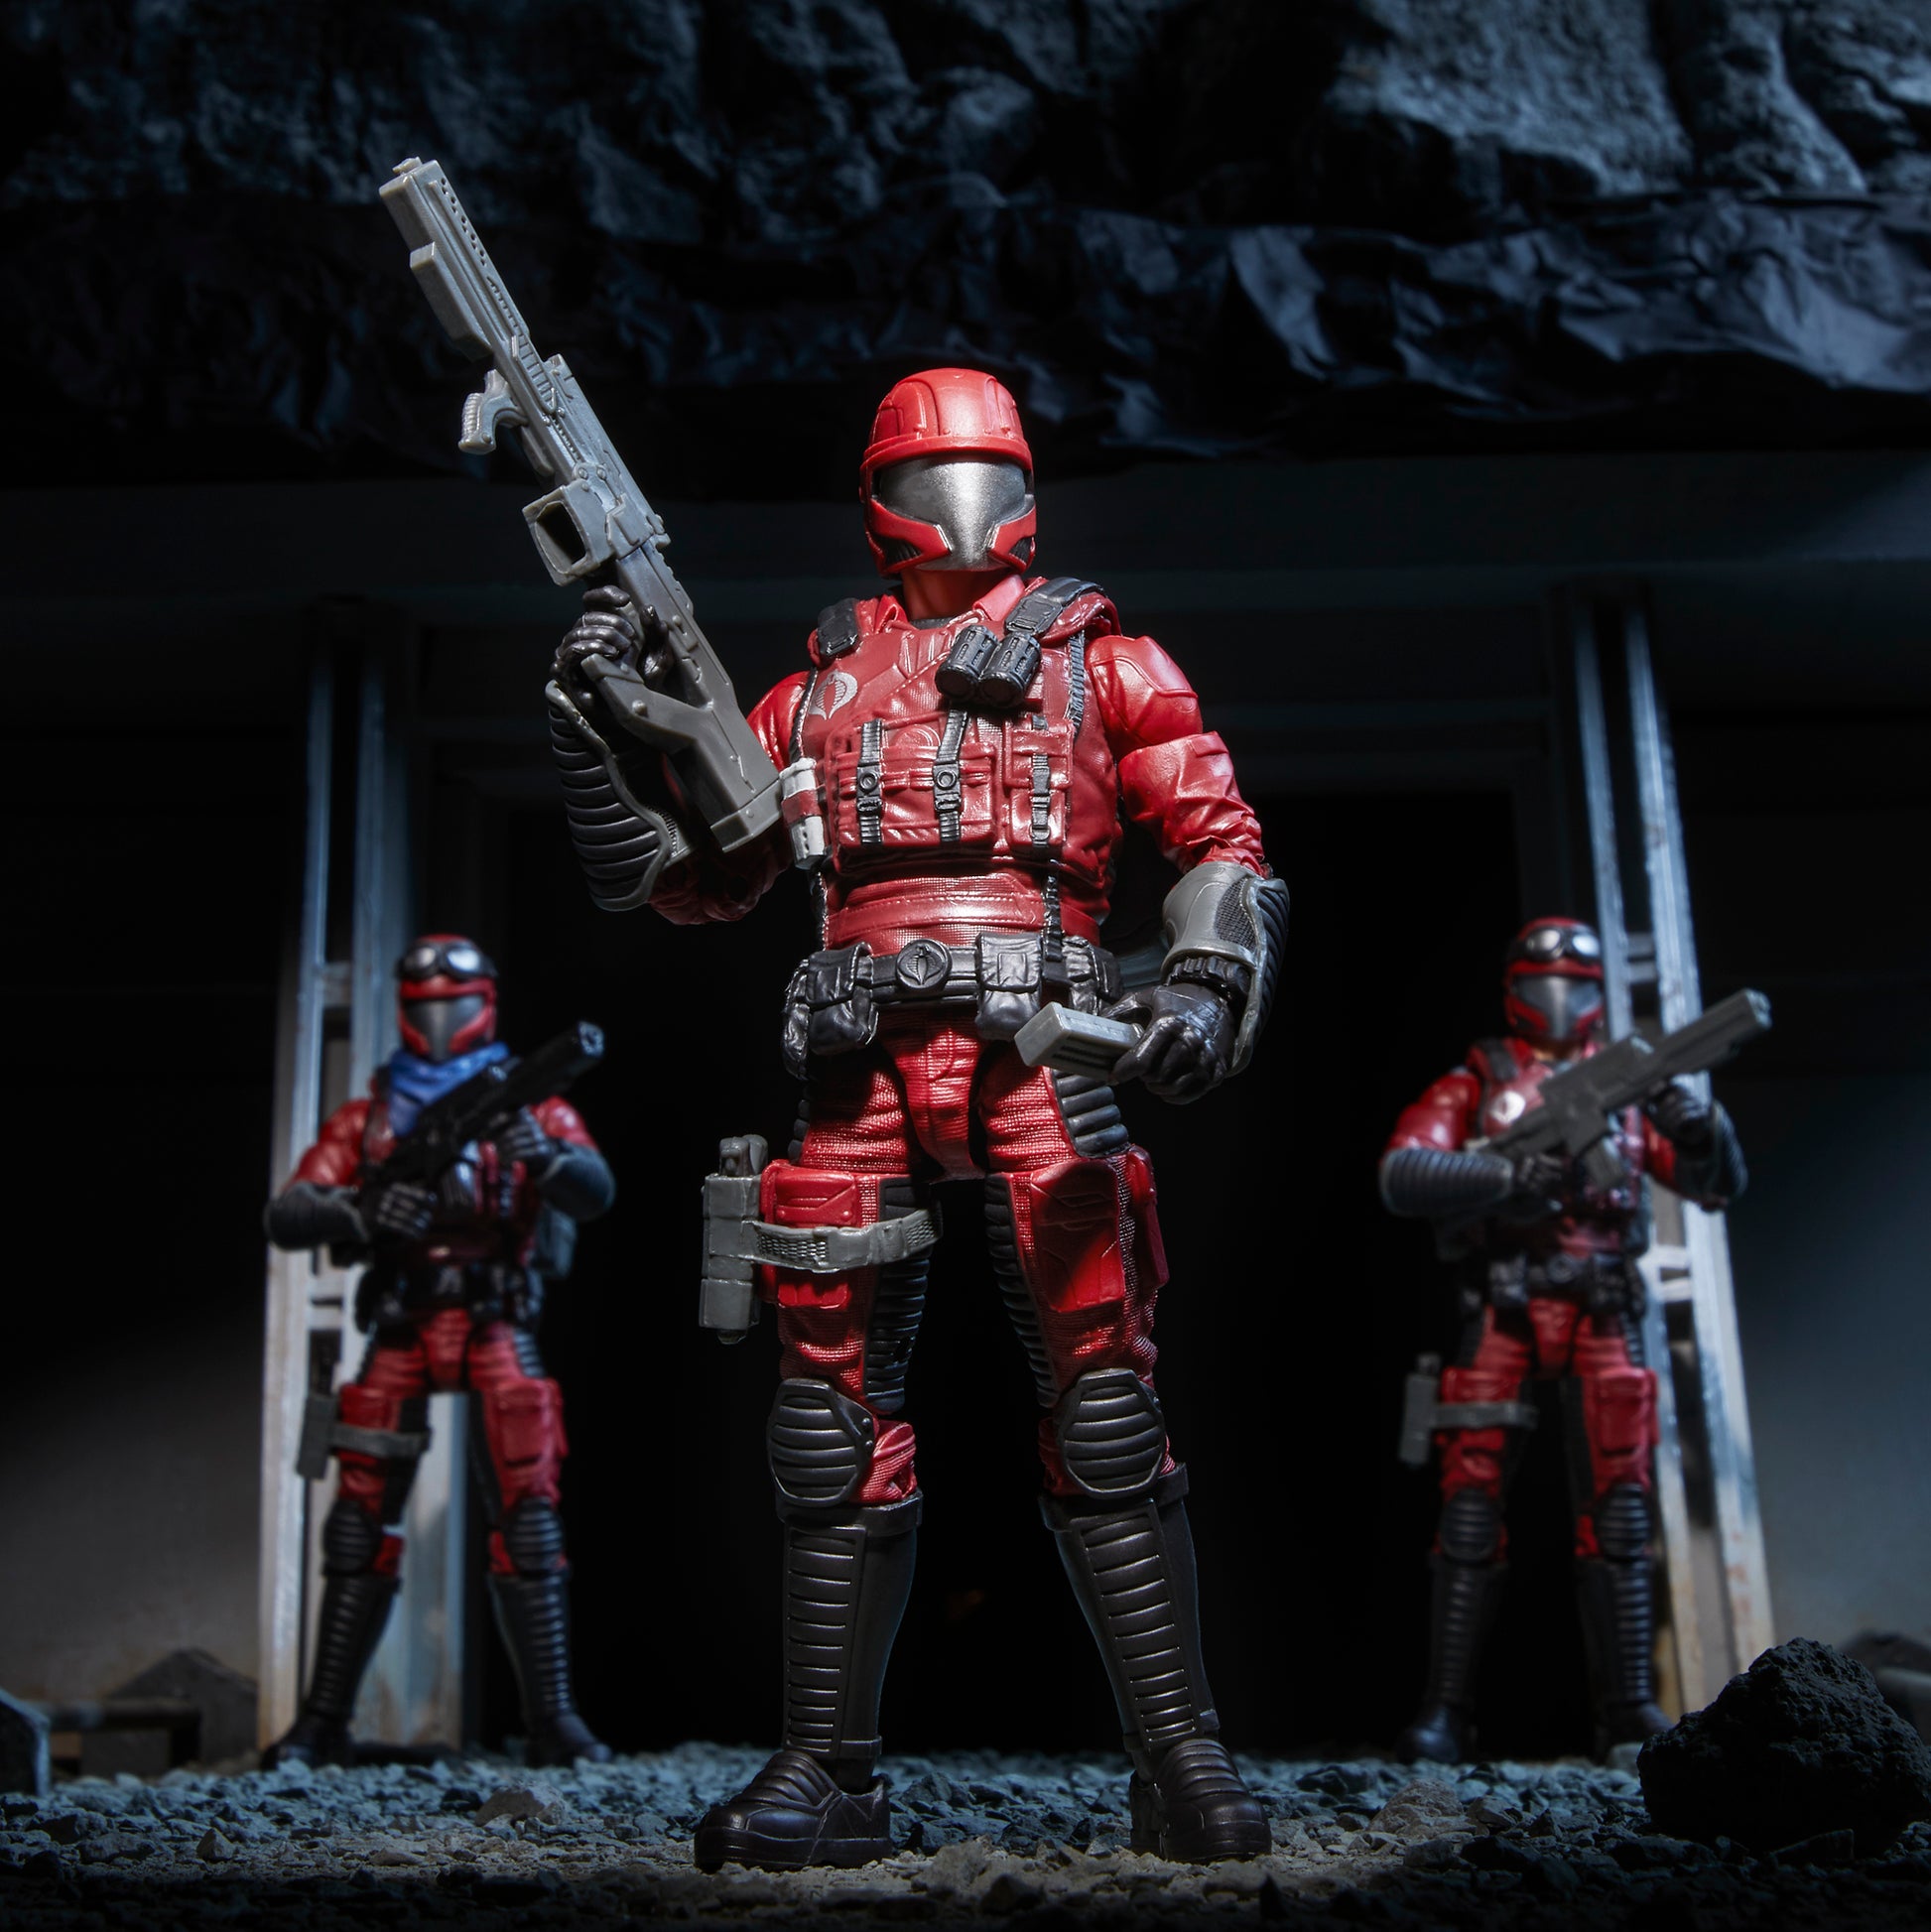 Crimson Viper Action Figure standing with gun in dark environment - Heretoserveyou